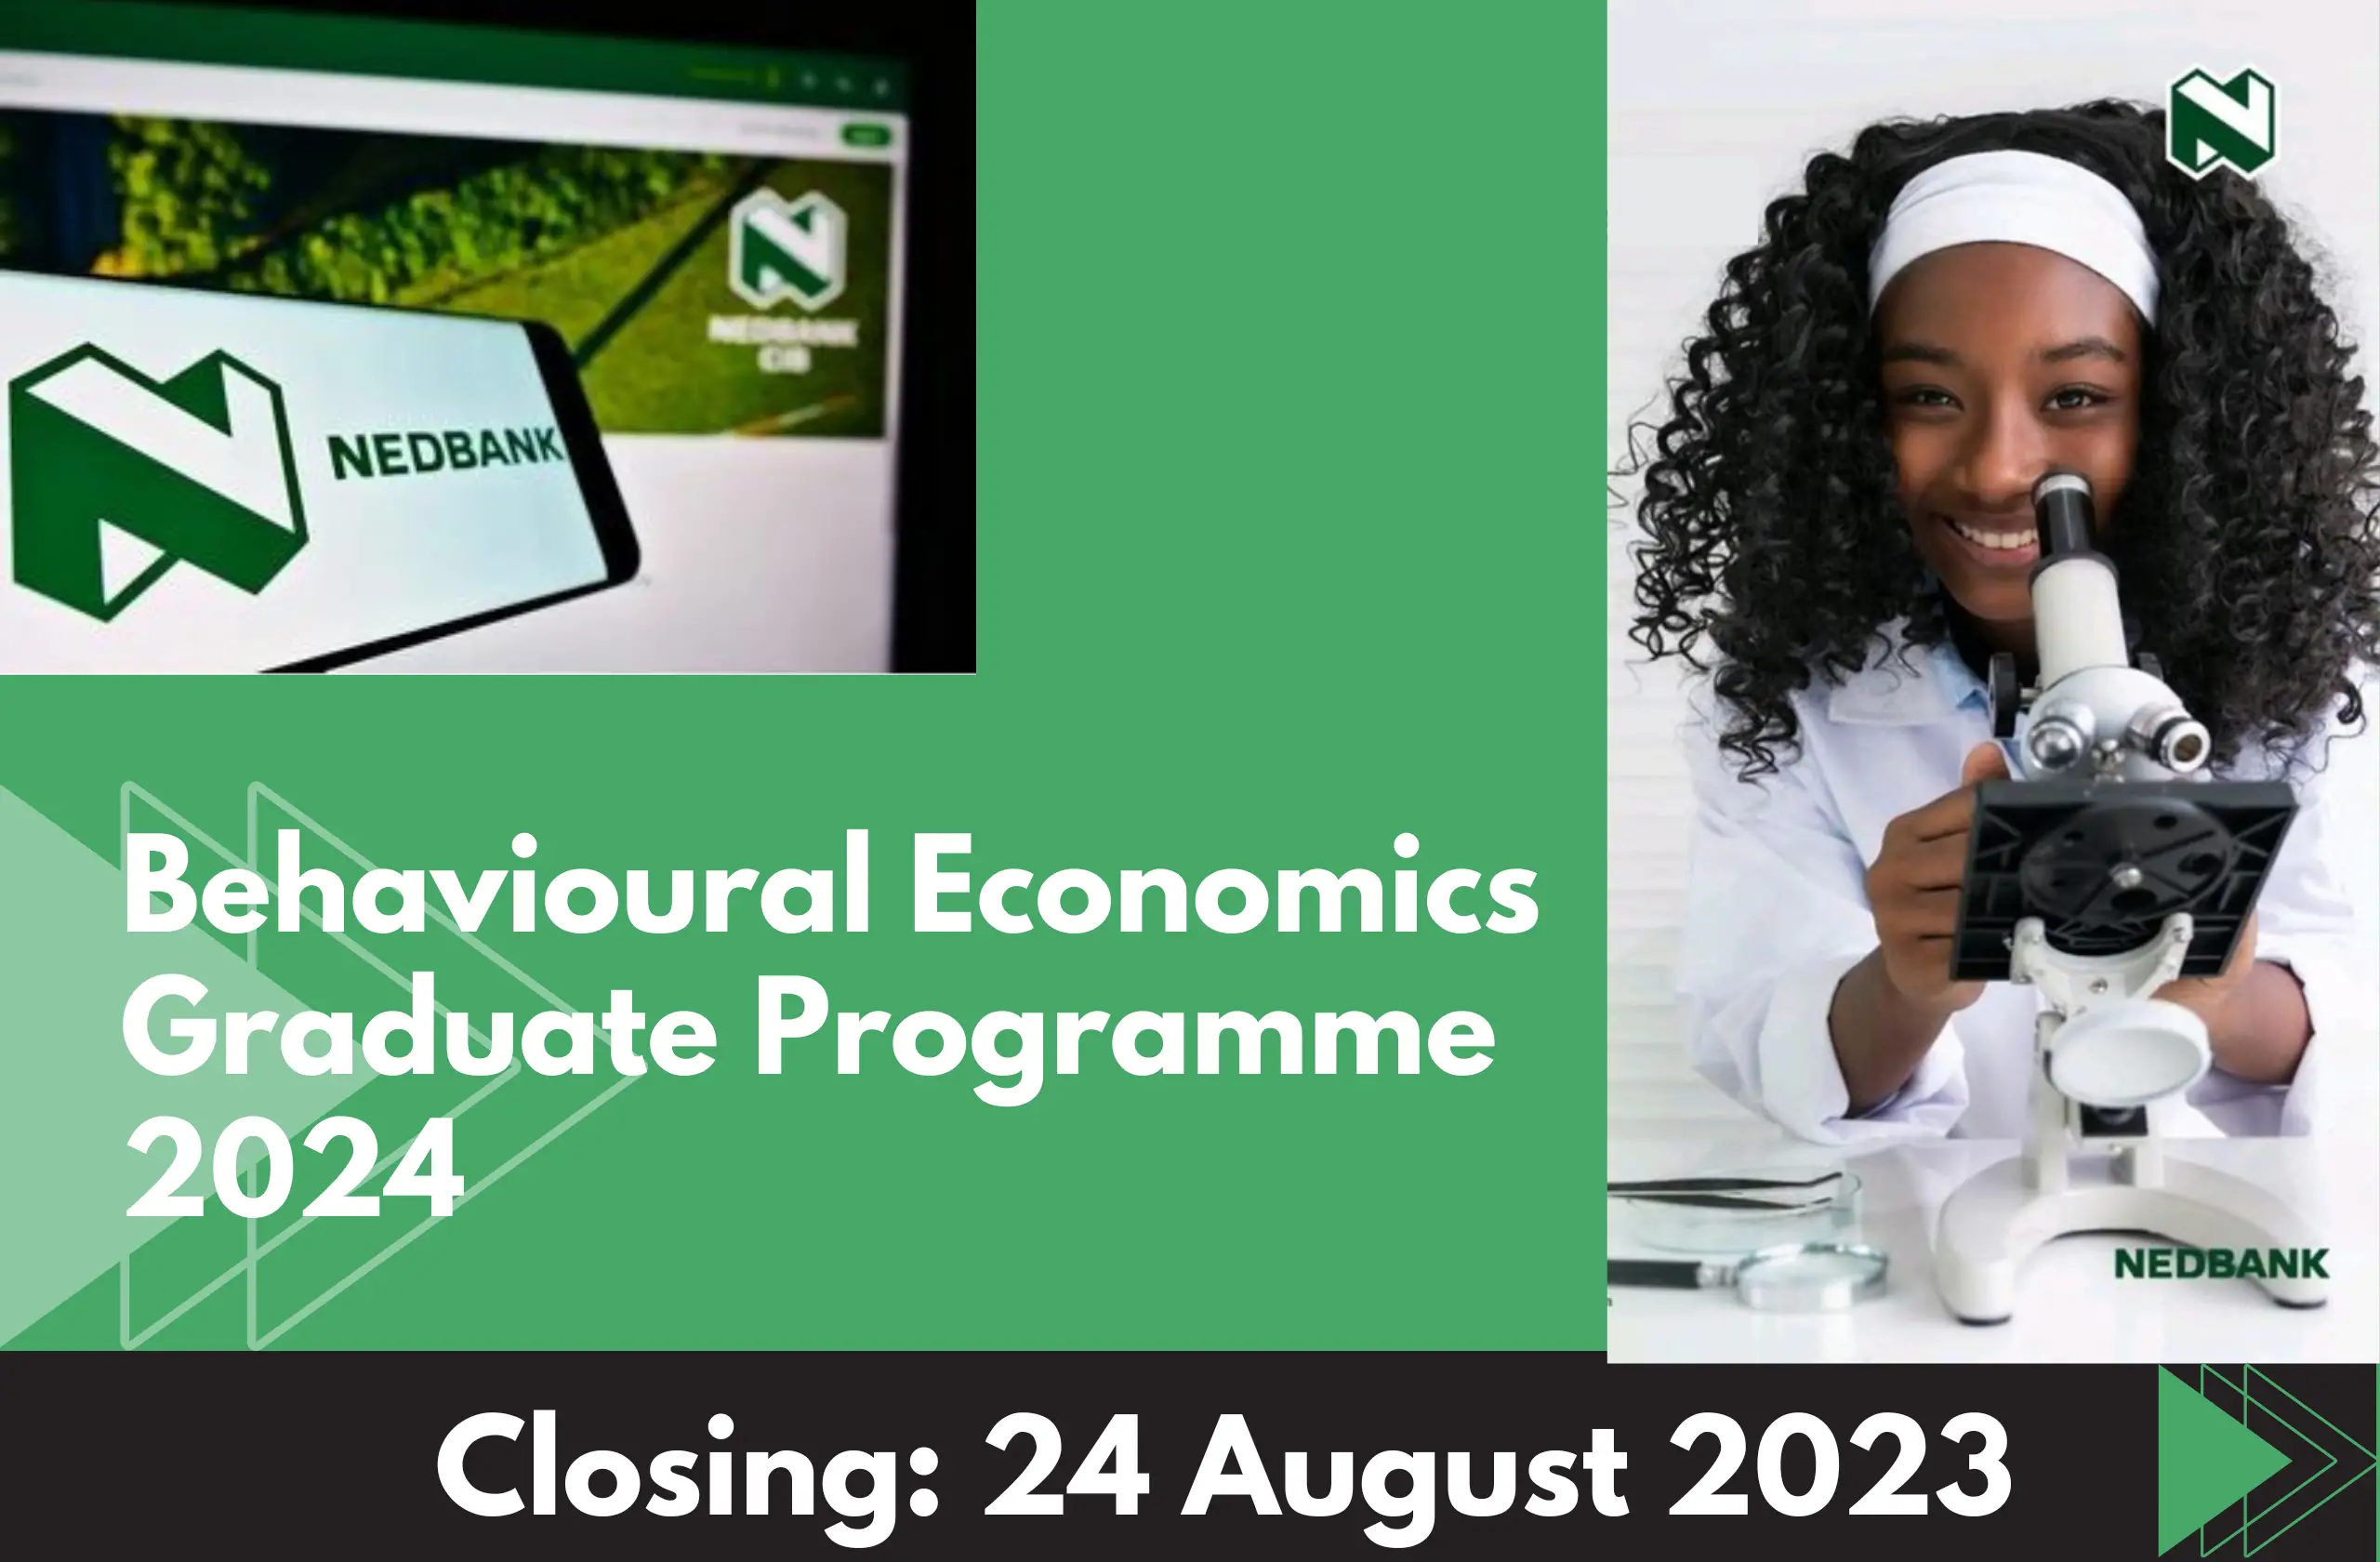 NedBank Behavioral Economics Graduate Programme 2024 - Launch Your Career Journey with Us